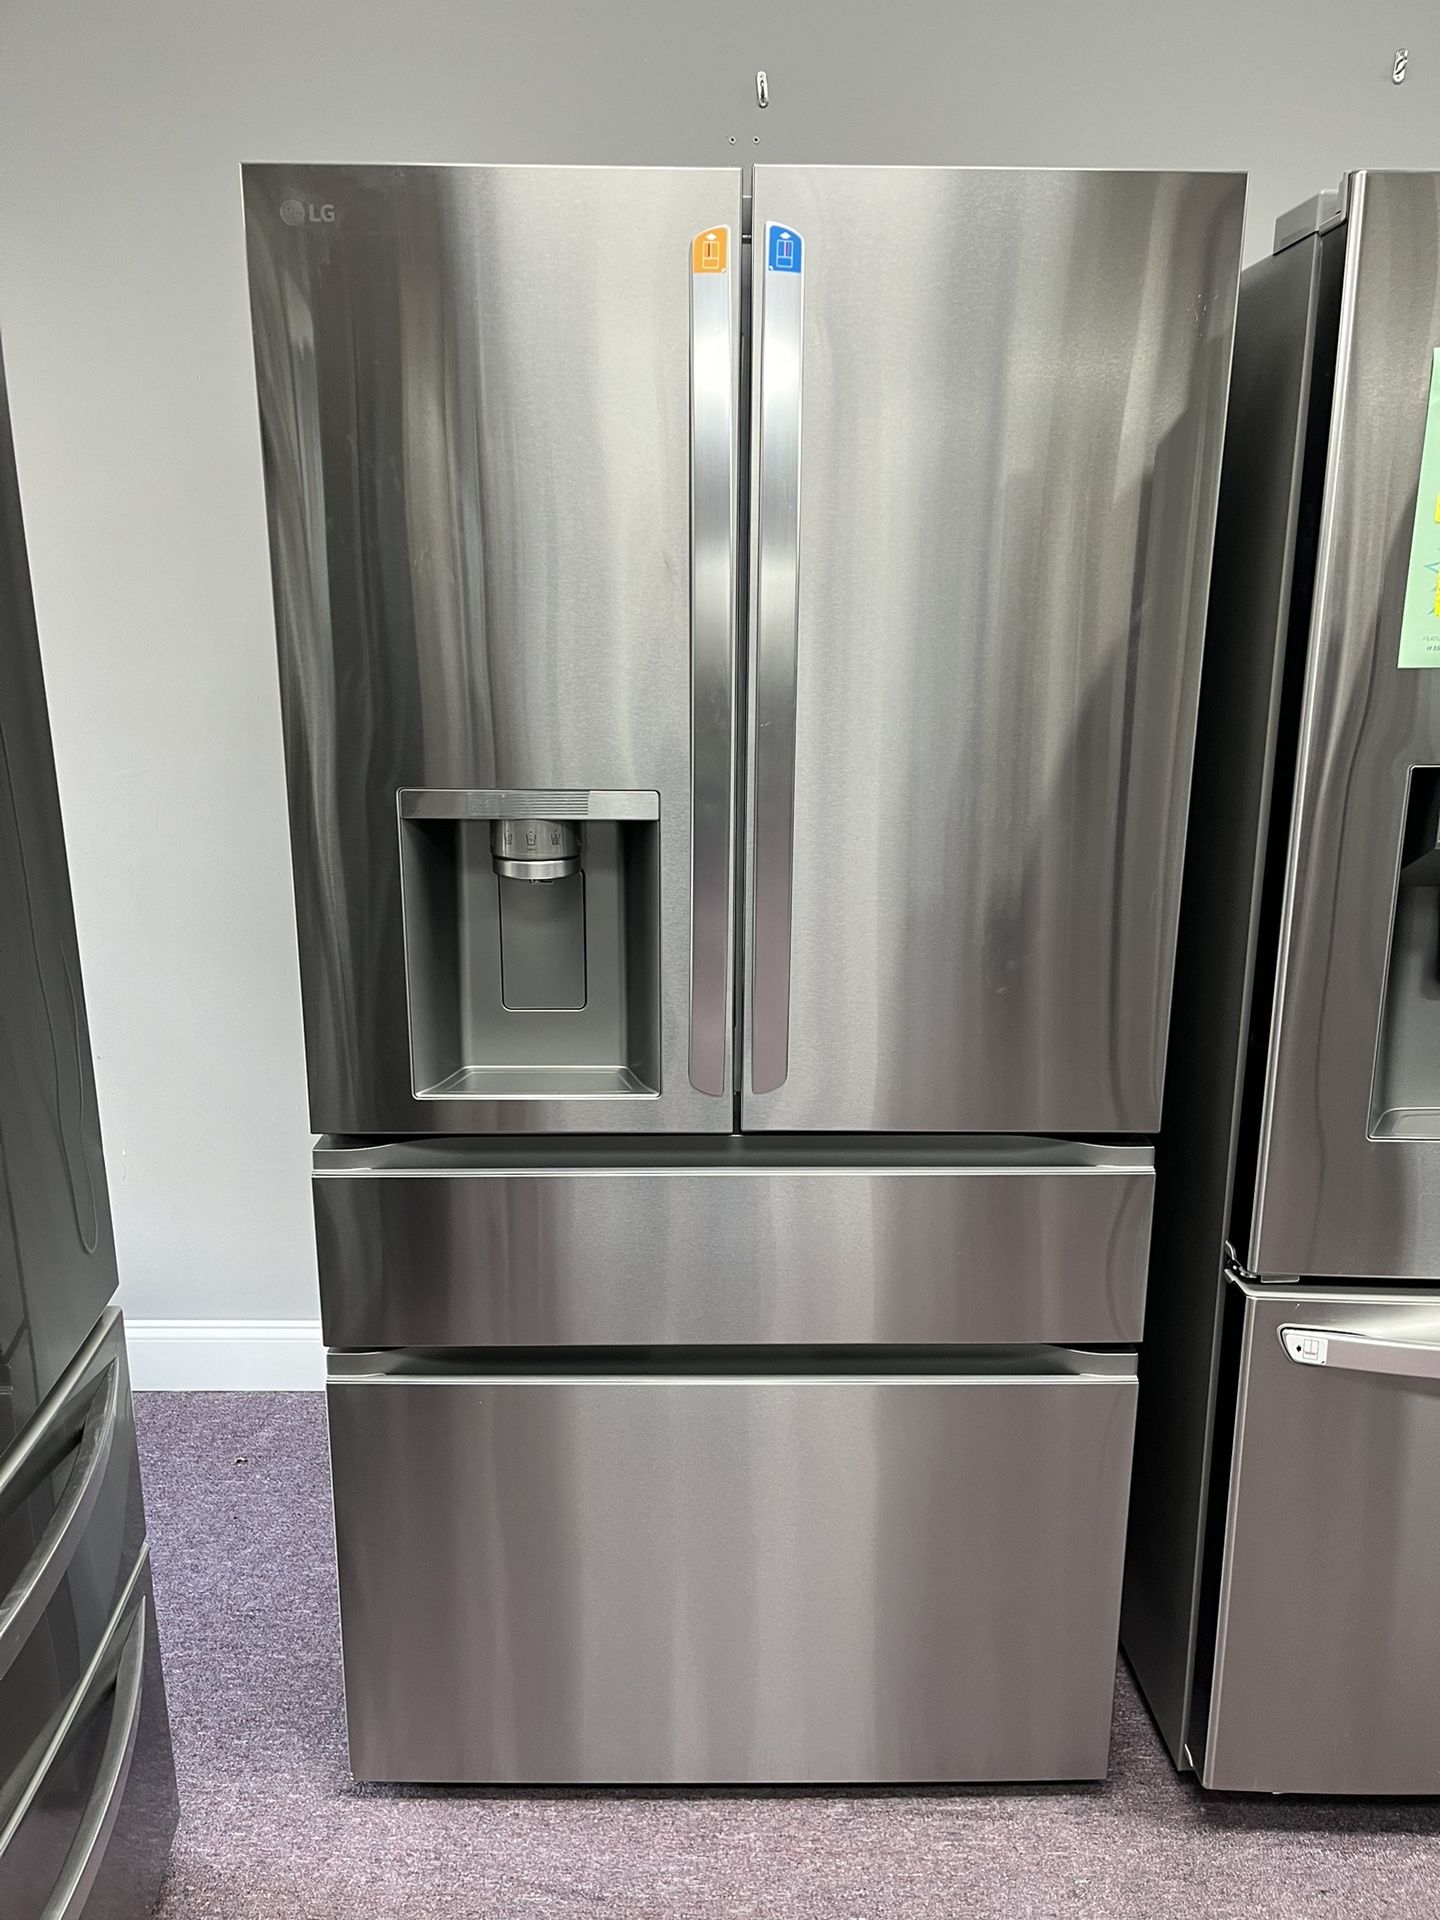 Refrigerator-LG Open Box Full Convert Drawer Refrigerator With 1 Year Warranty 